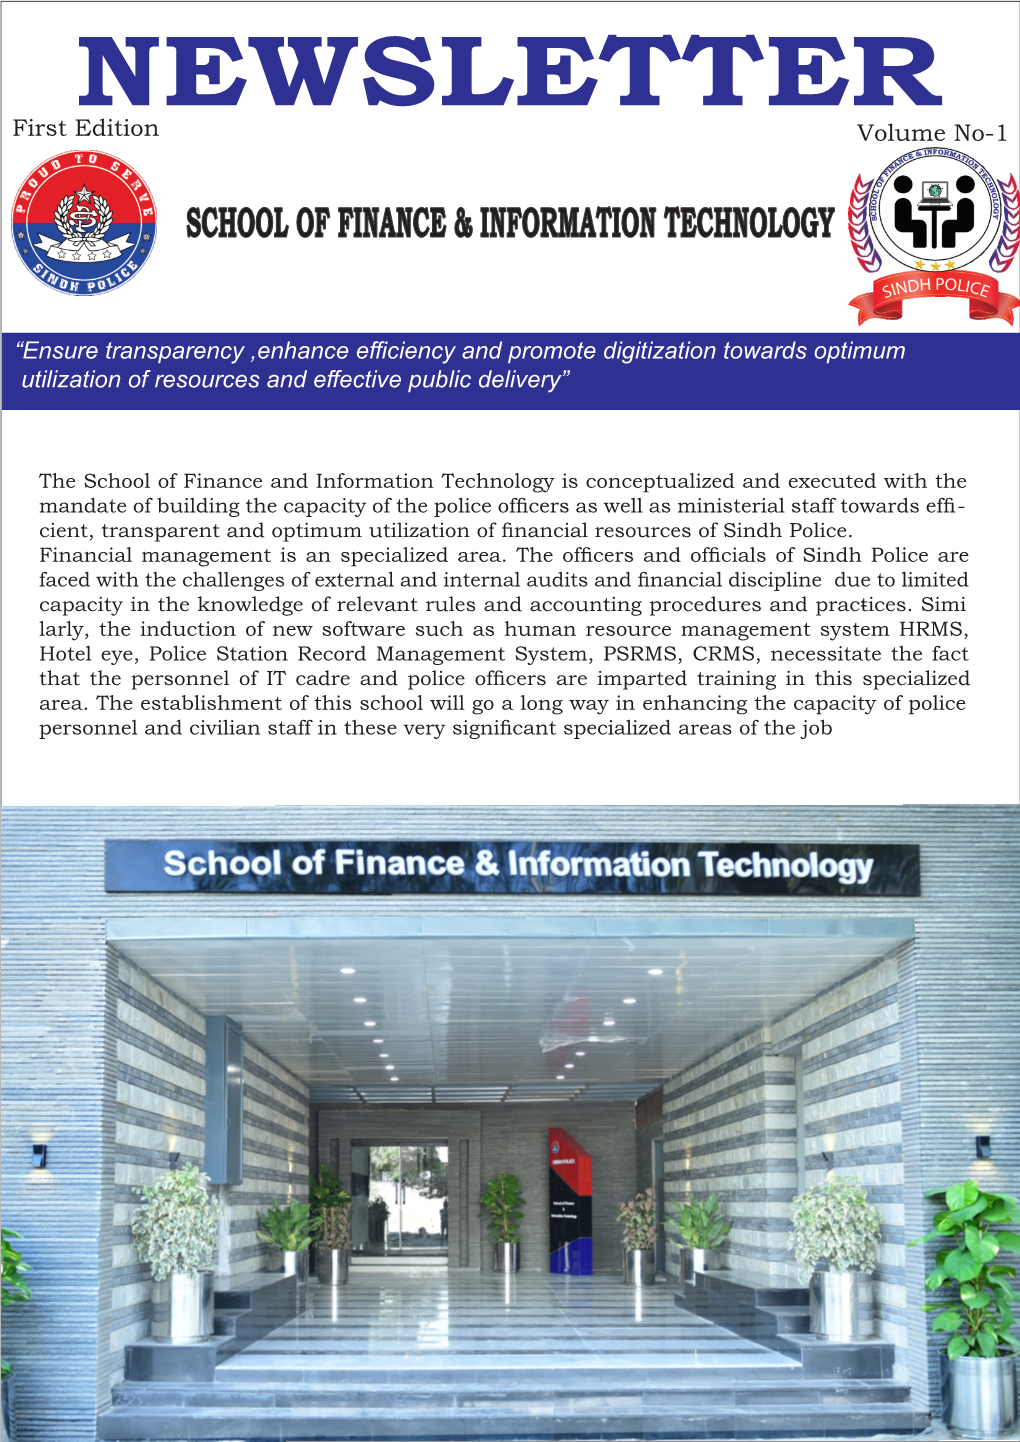 School of Finance & Information Technology